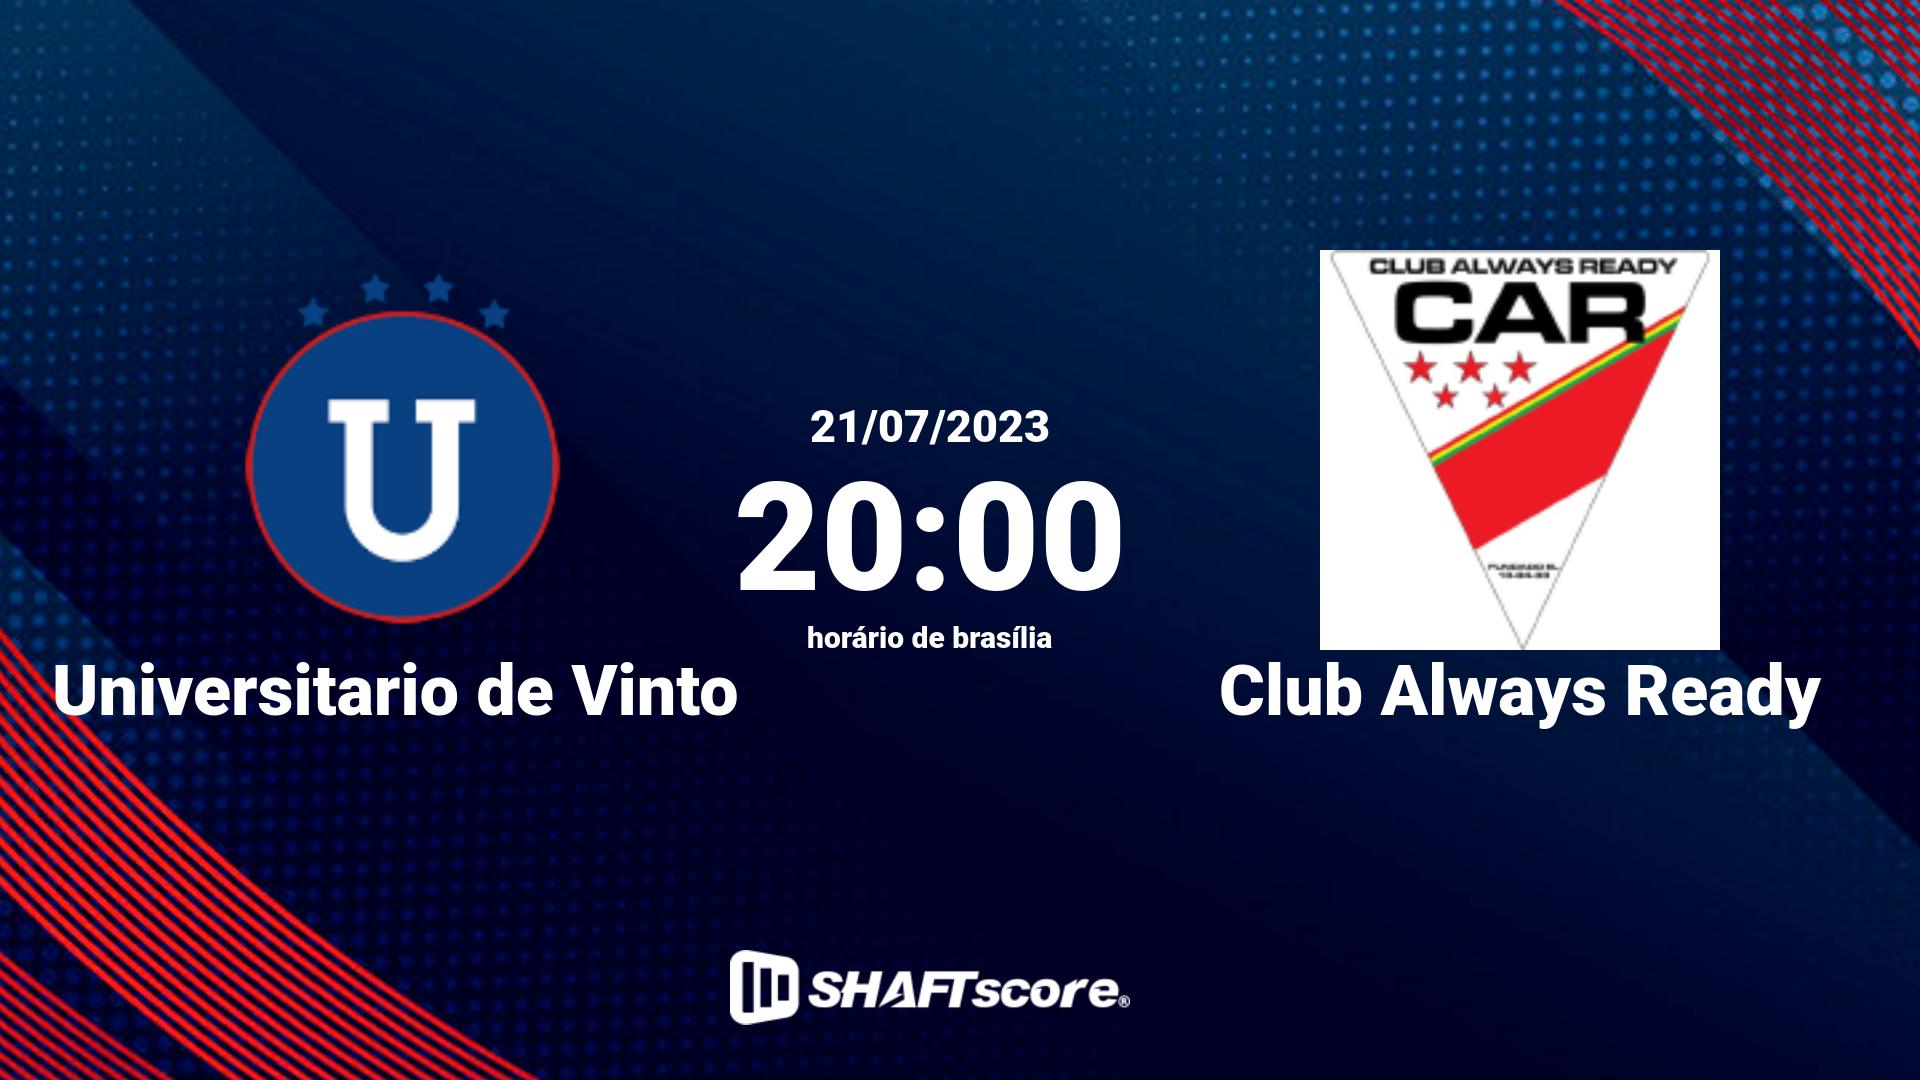 Estatísticas do jogo Universitario de Vinto vs Club Always Ready 21.07 20:00